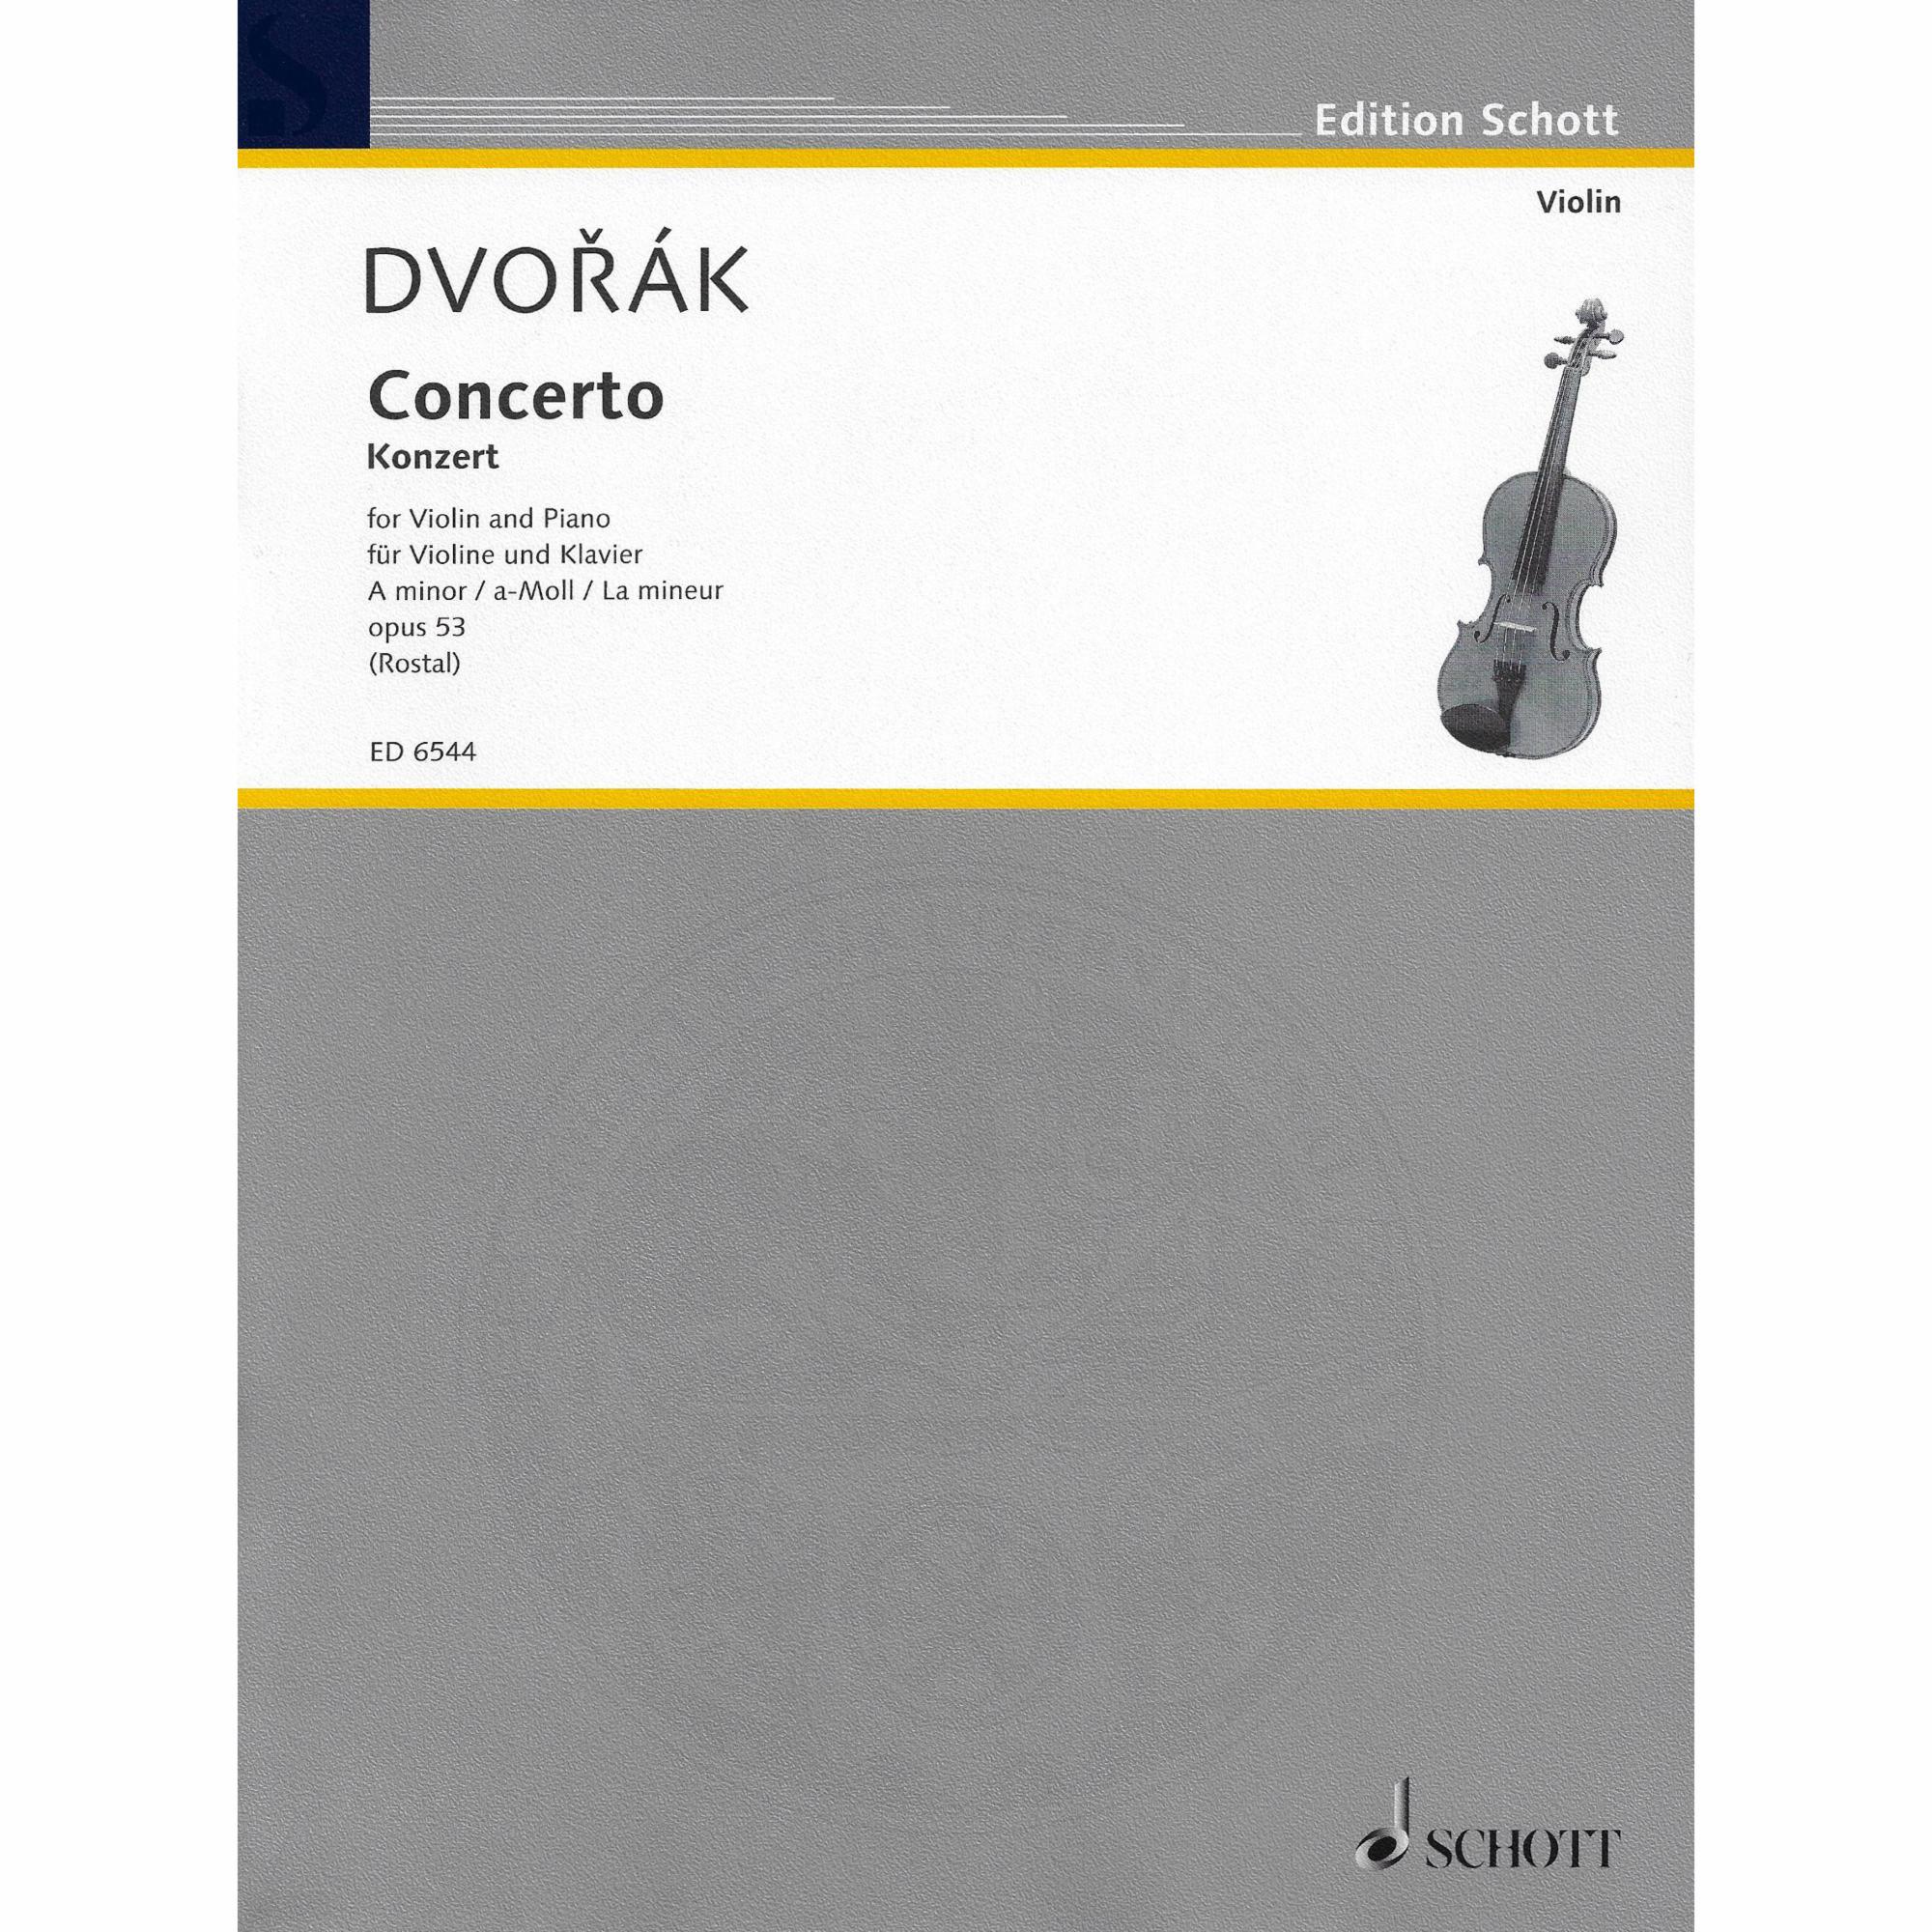 Dvorak -- Concerto in A Minor, Op. 53 for Violin and Piano